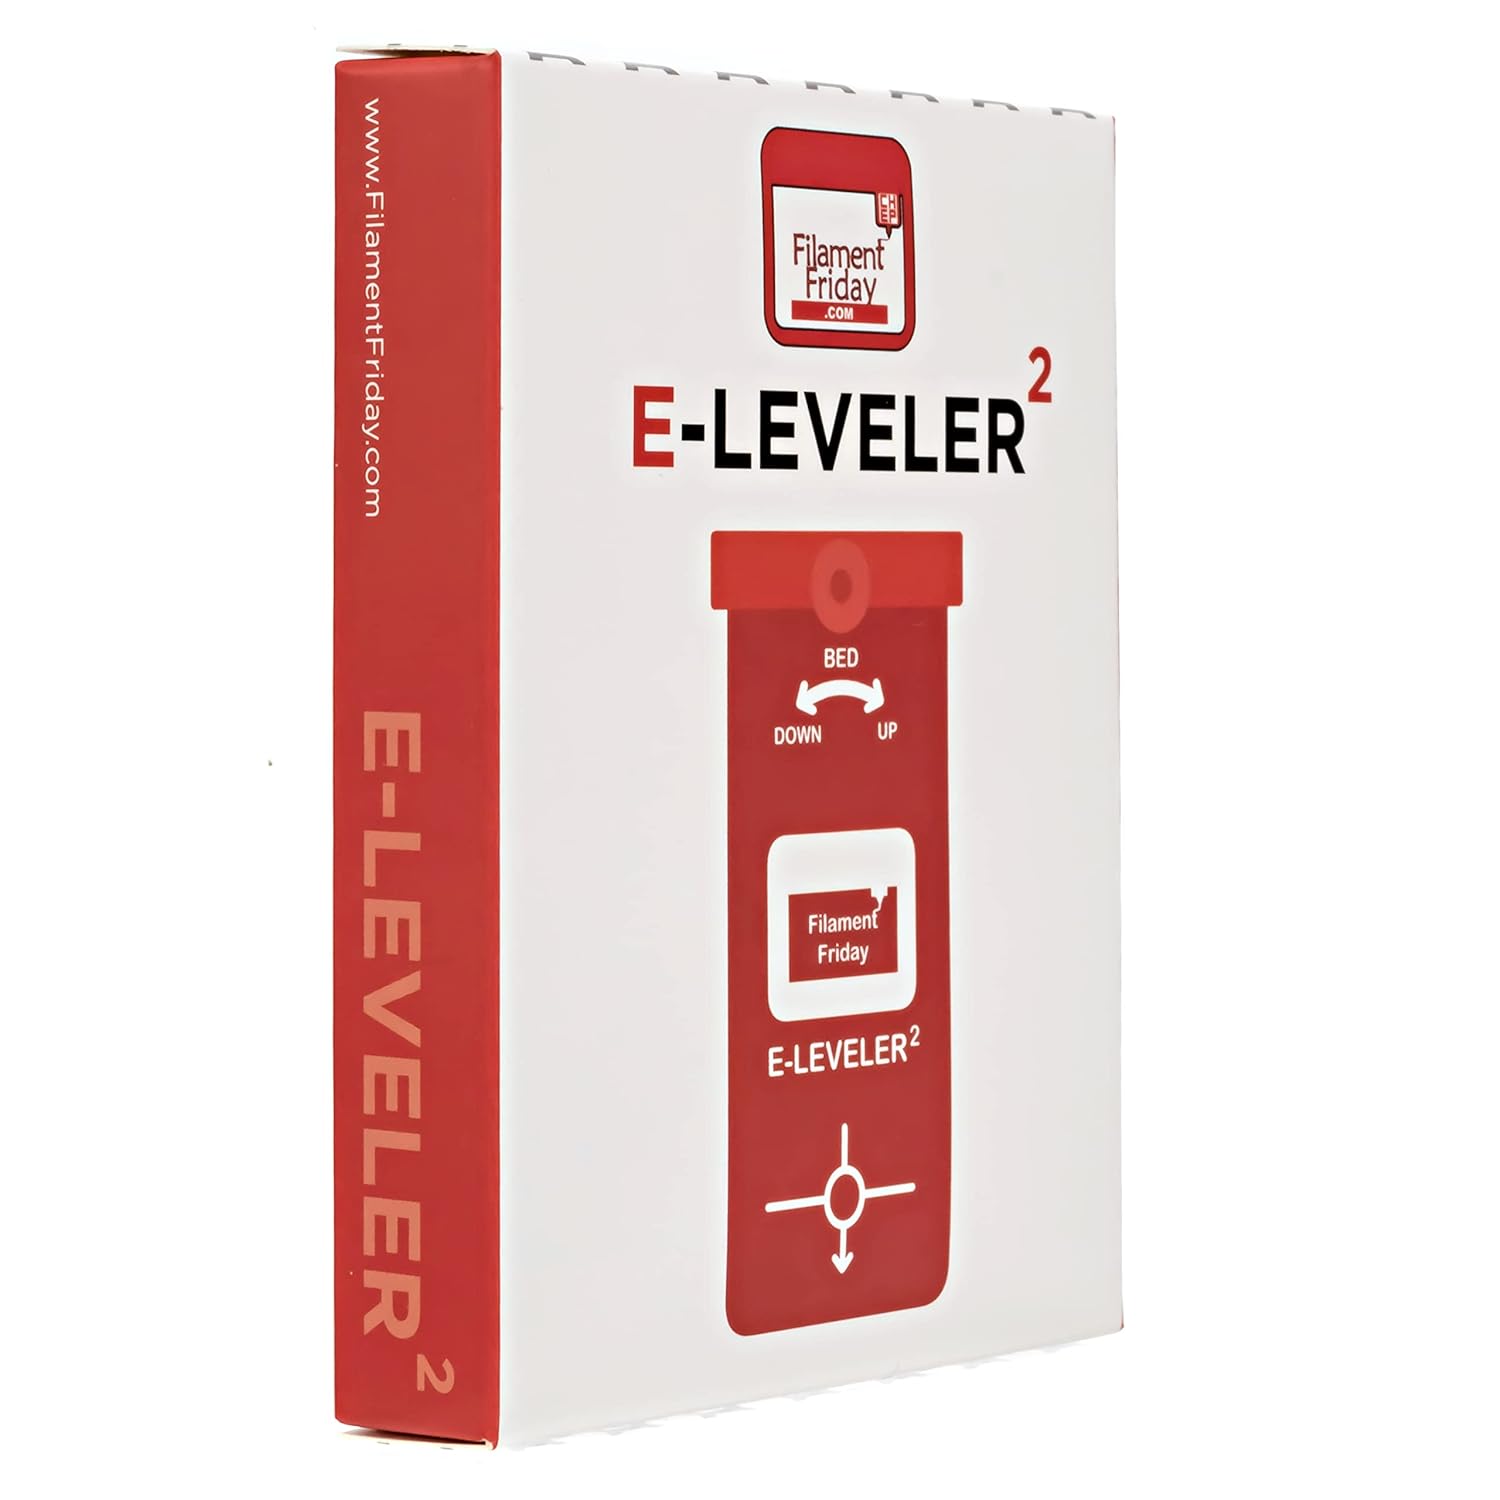 filament-friday-e-leveler-2-the-original-3d-printer-electronic-bed-leveling-tool-4 Filament Friday E-Leveler 2 Review